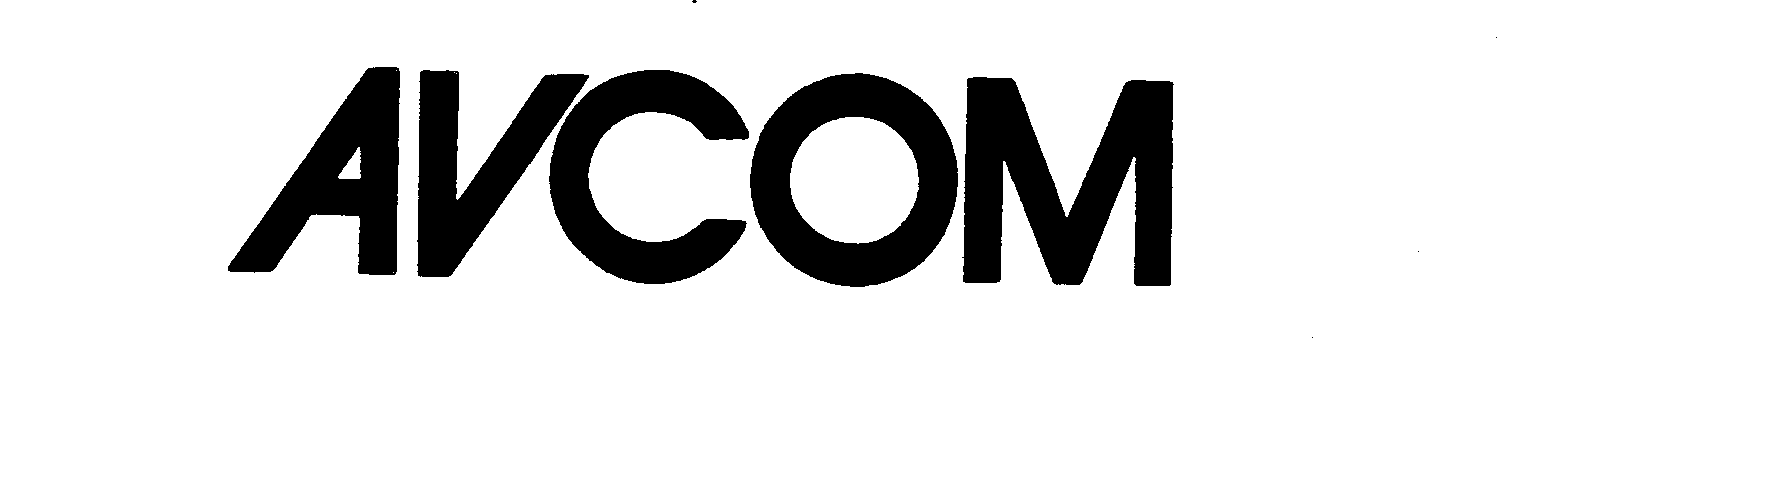 Trademark Logo AVCOM